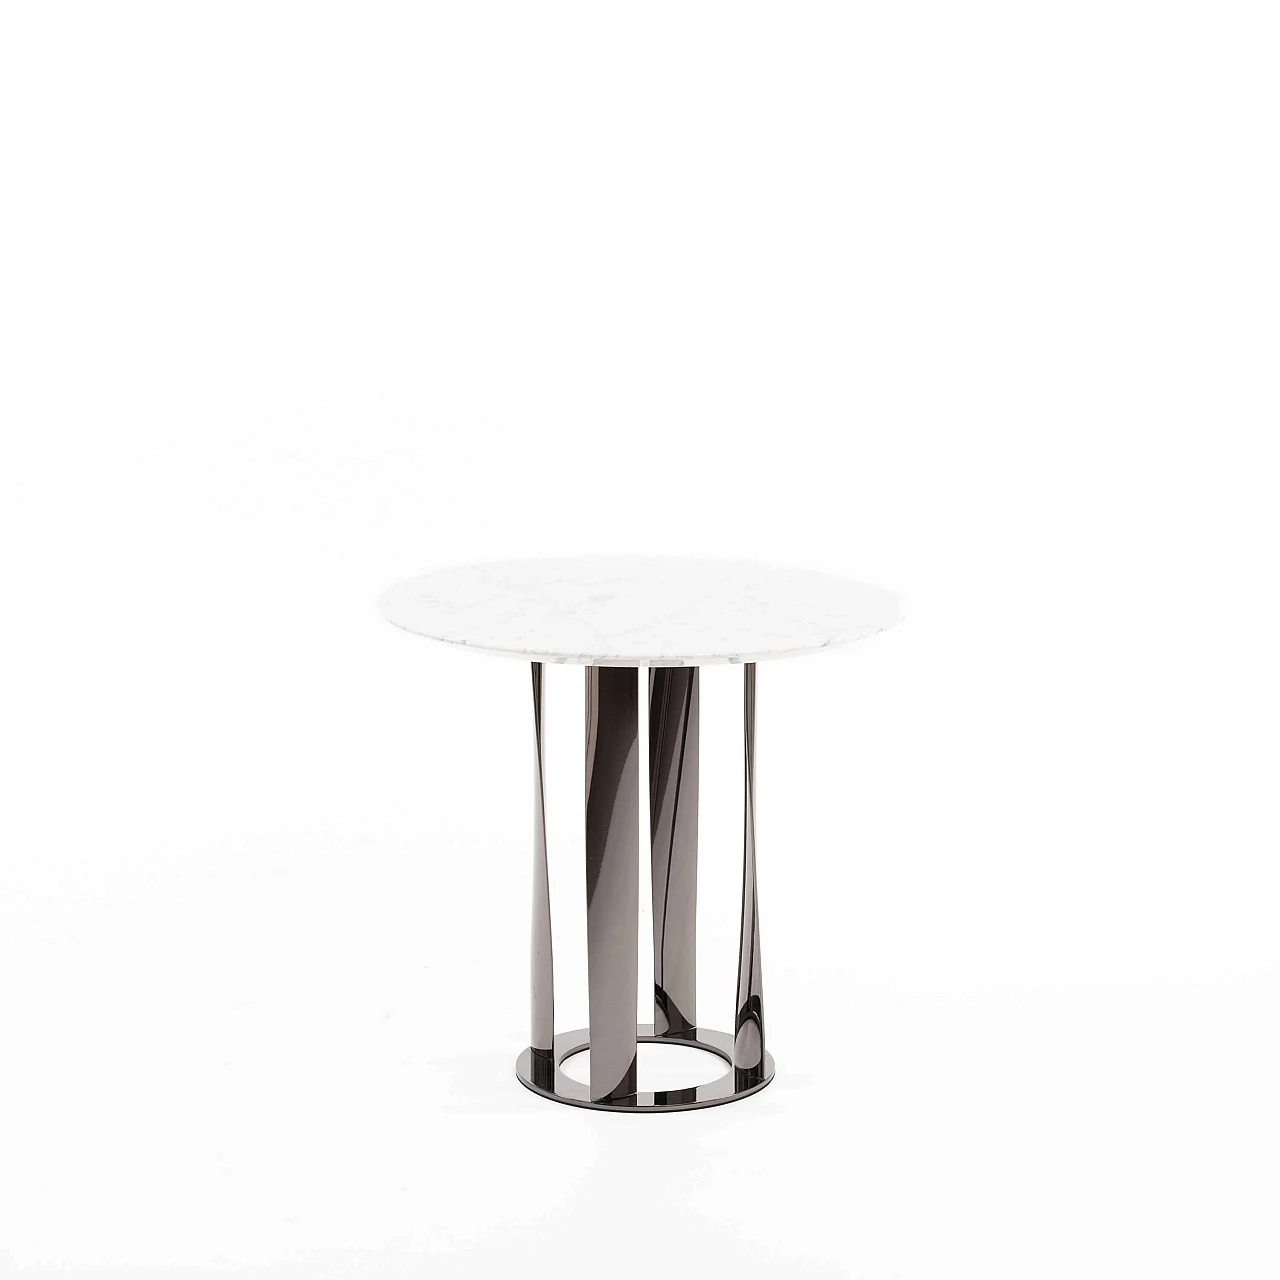 Boboli coffee table by Rodolfo Dordoni for Cassina 1